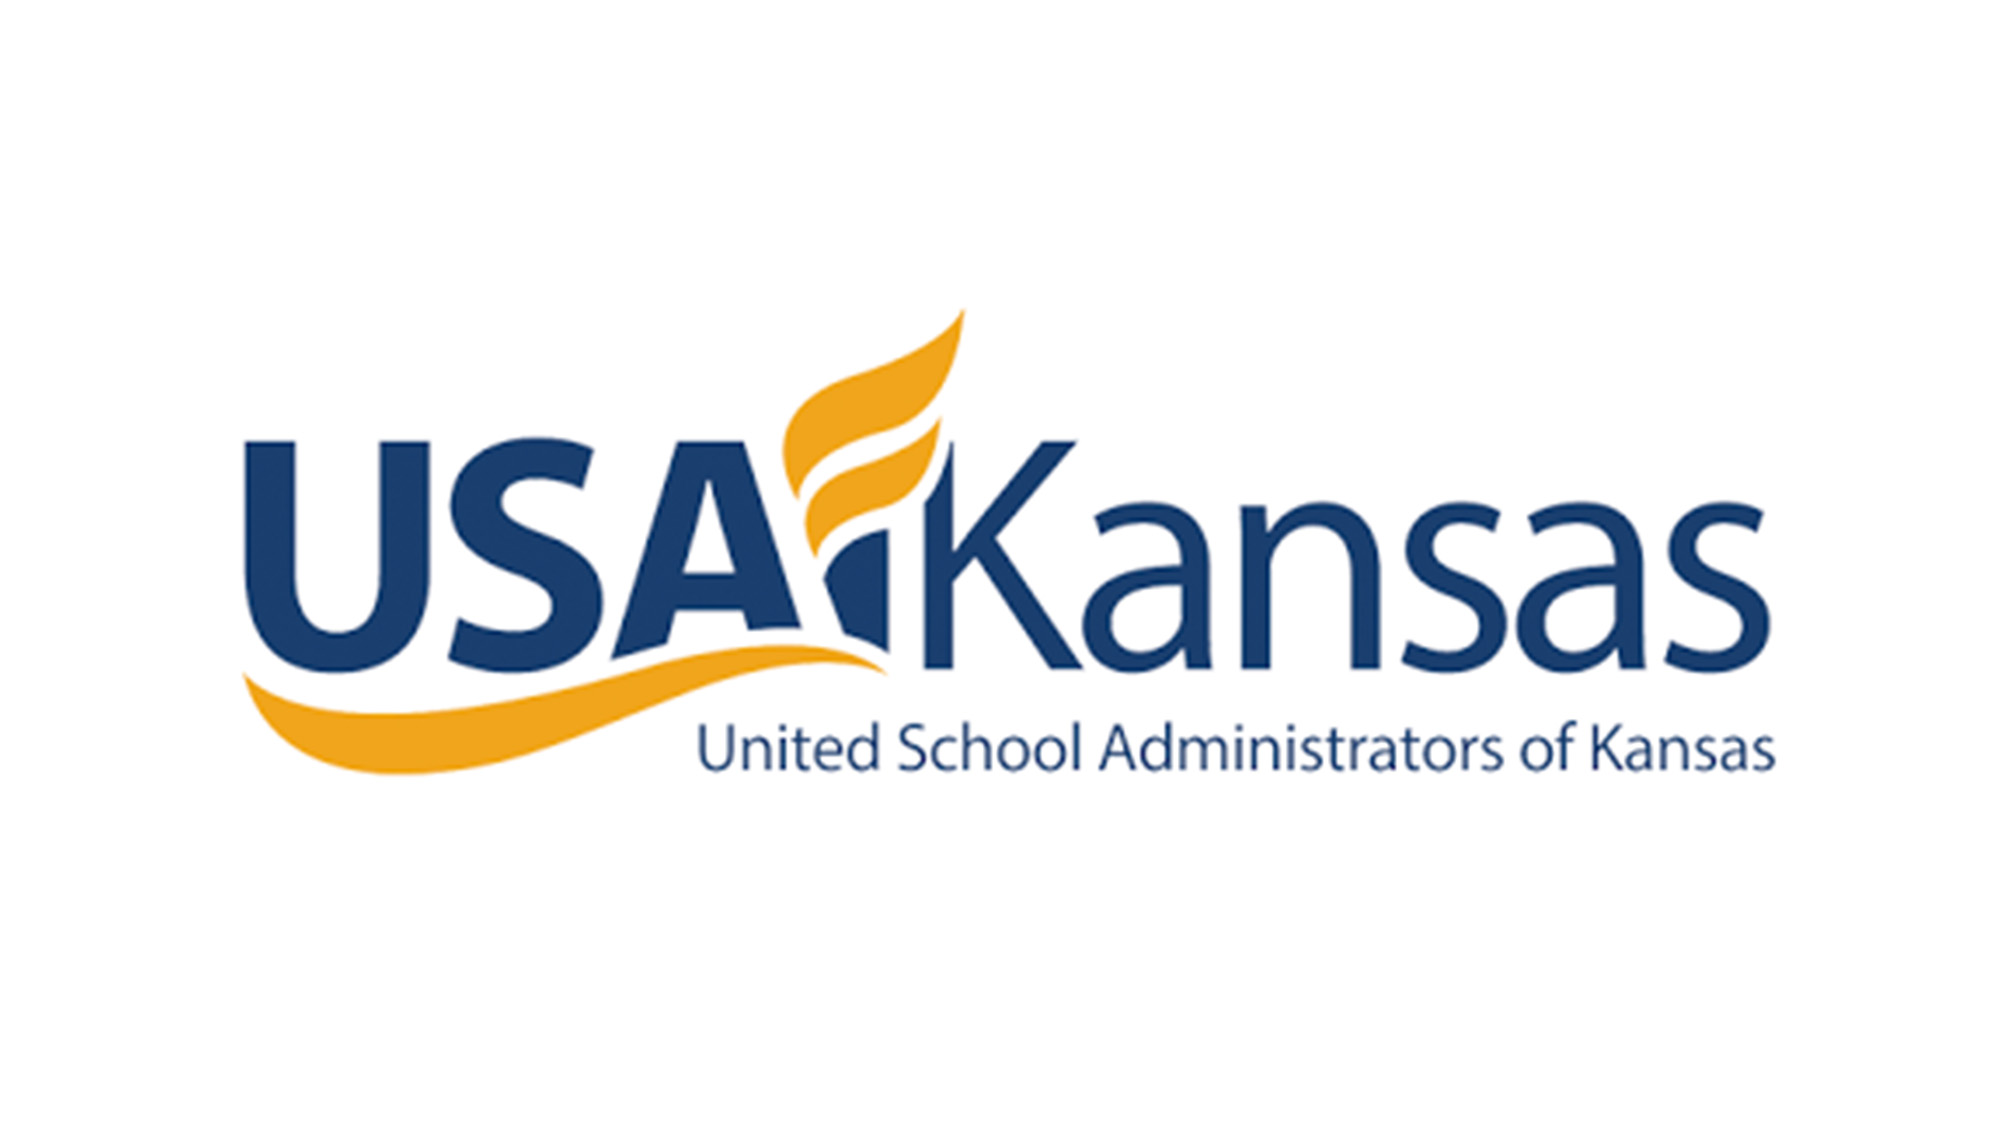 United School Administrators of Kansas